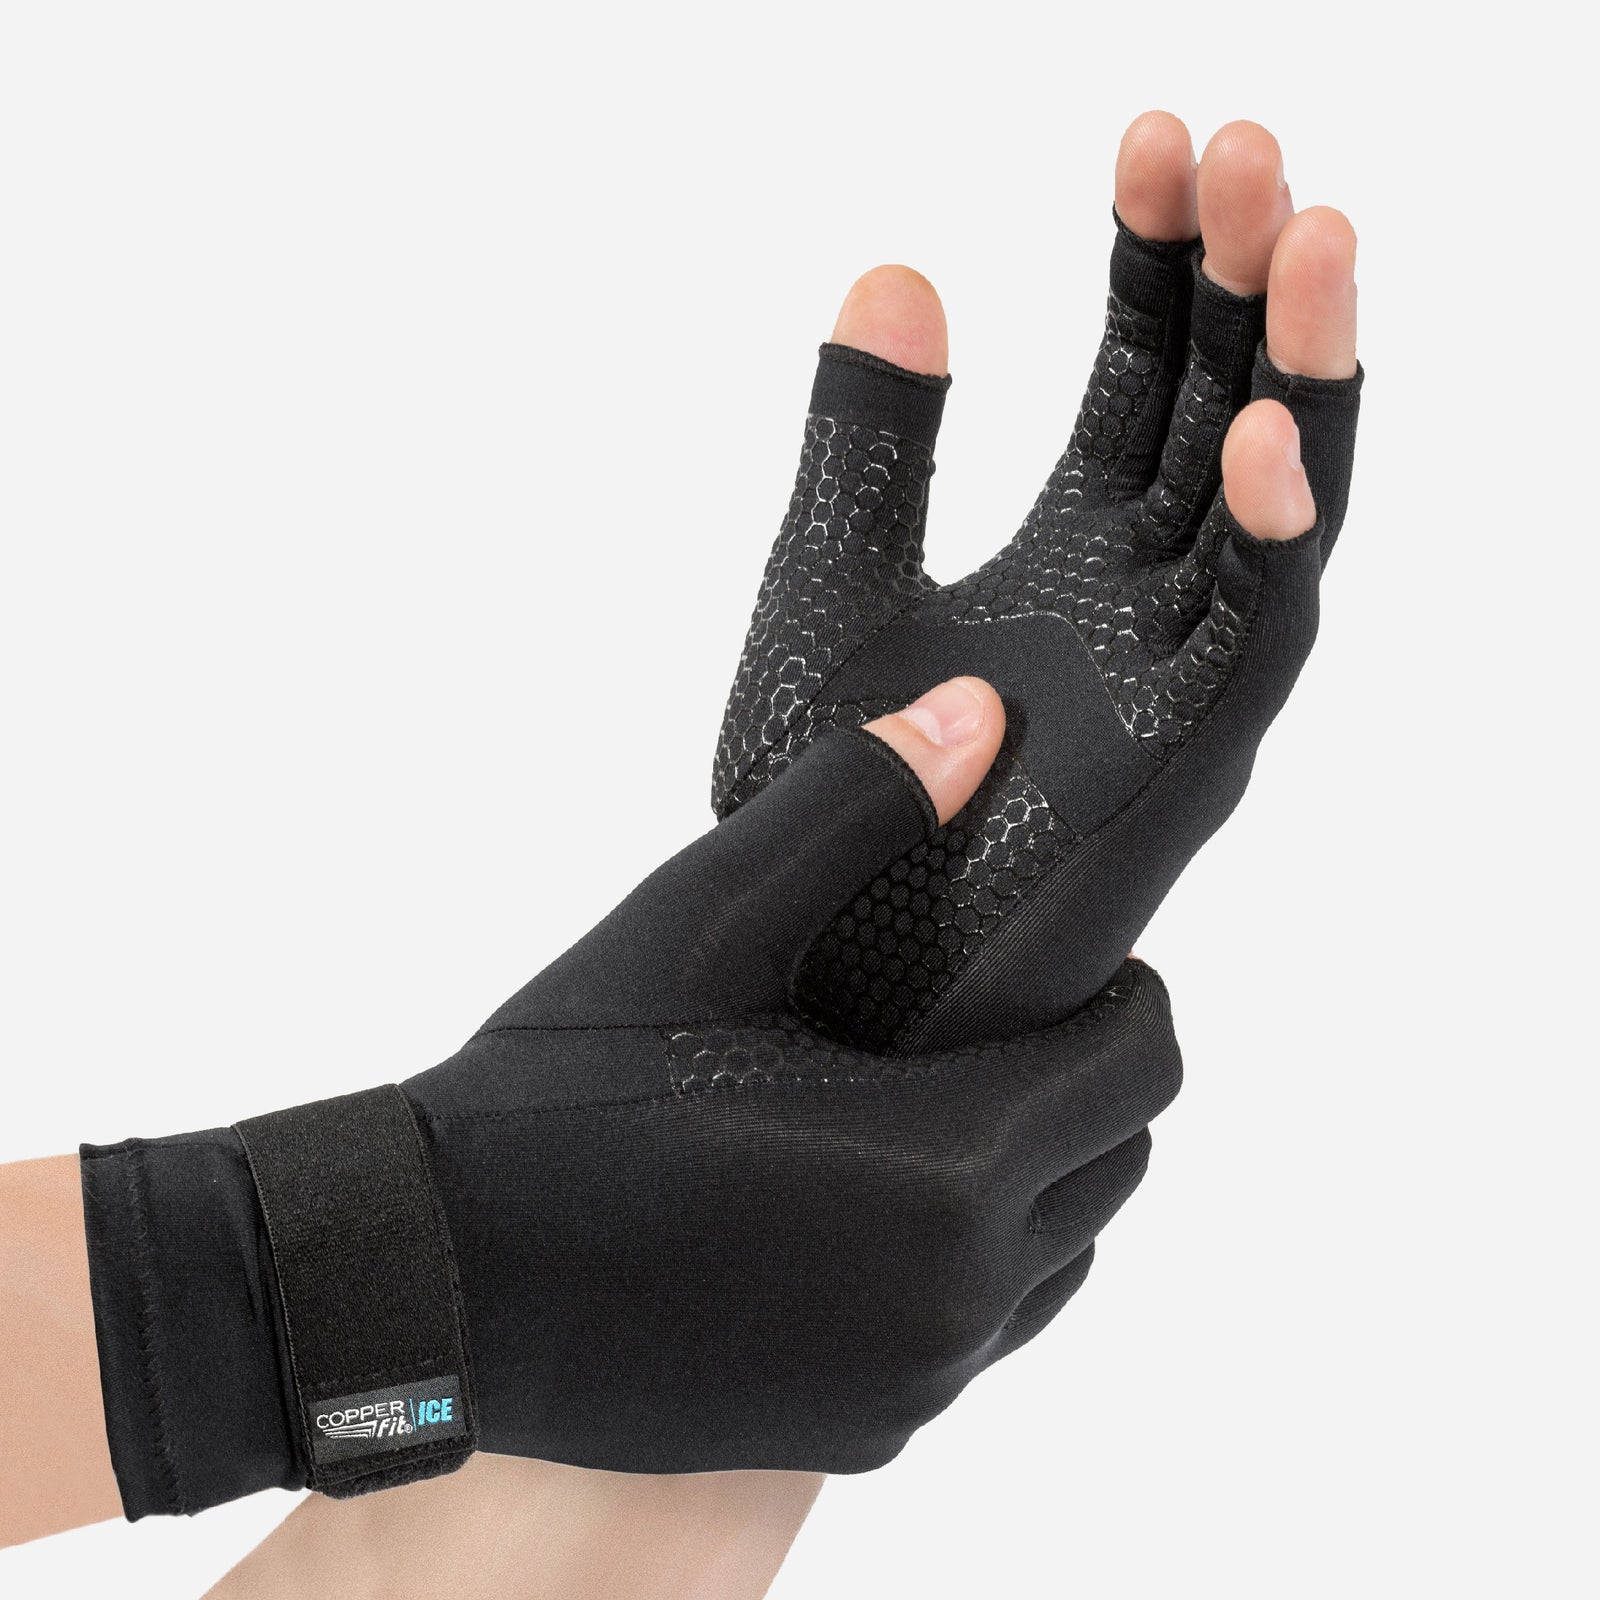 Copper Joe Full Finger Compression Arthritis Gloves-1 Pair , Medium -  Gerbes Super Markets